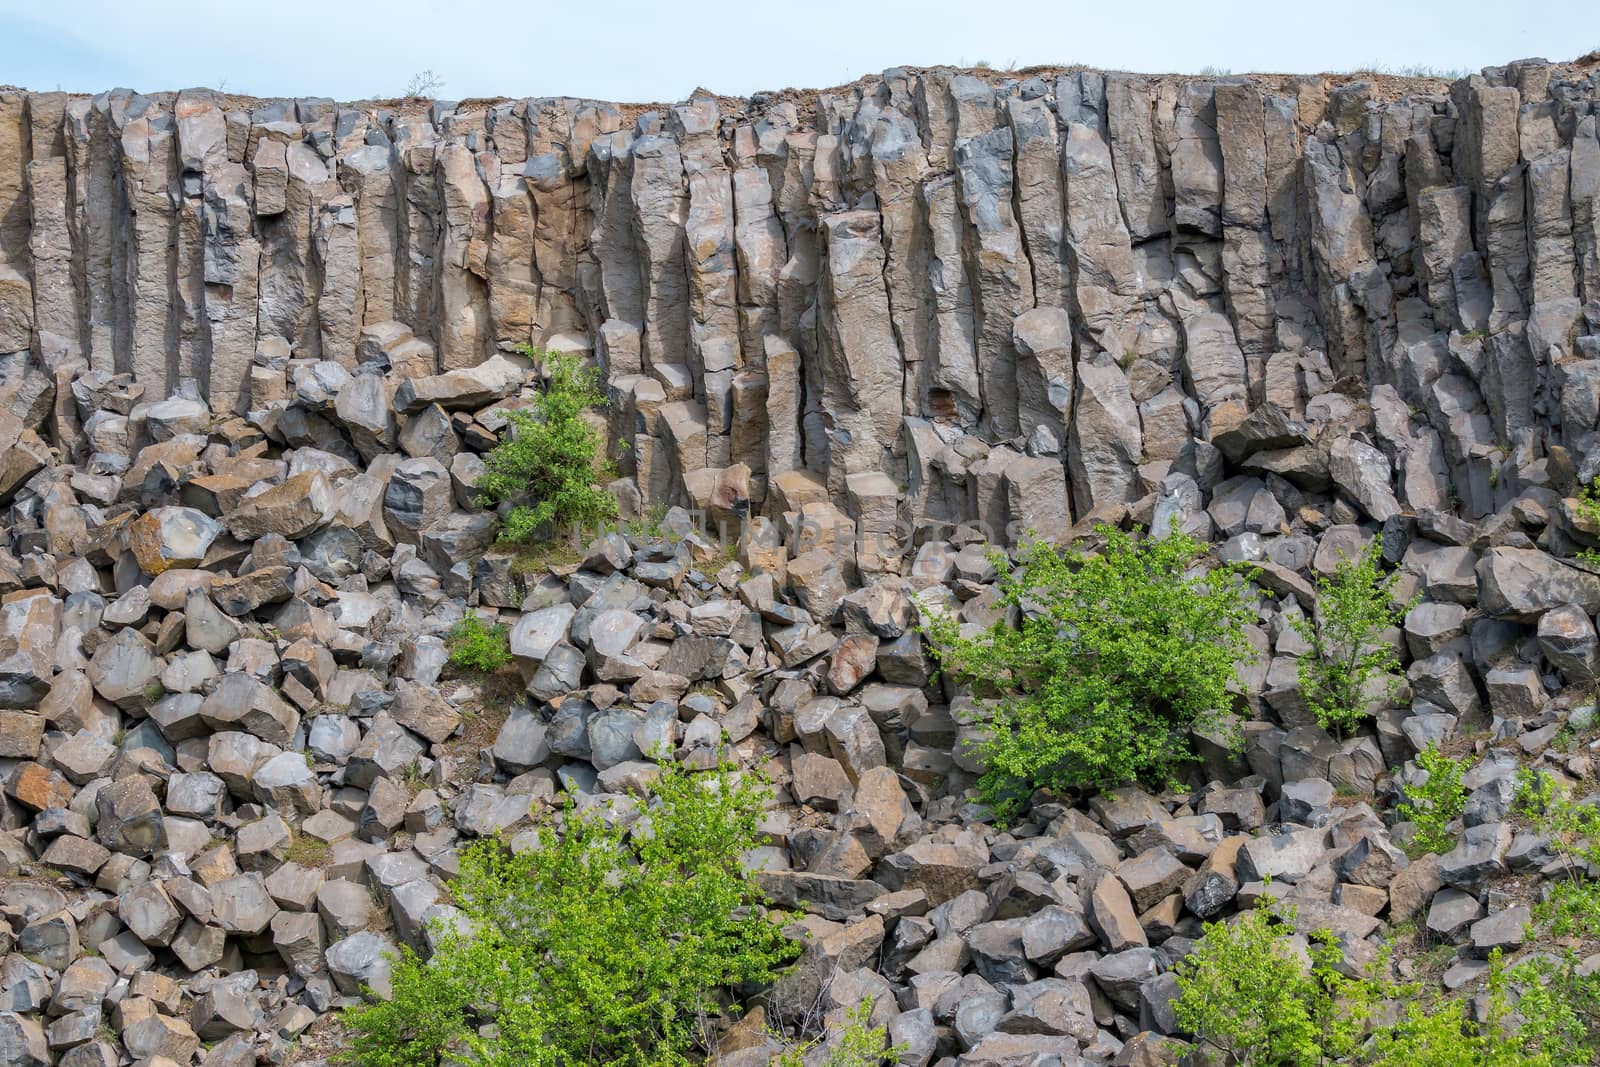 Interesting columnar basalt at Hungary